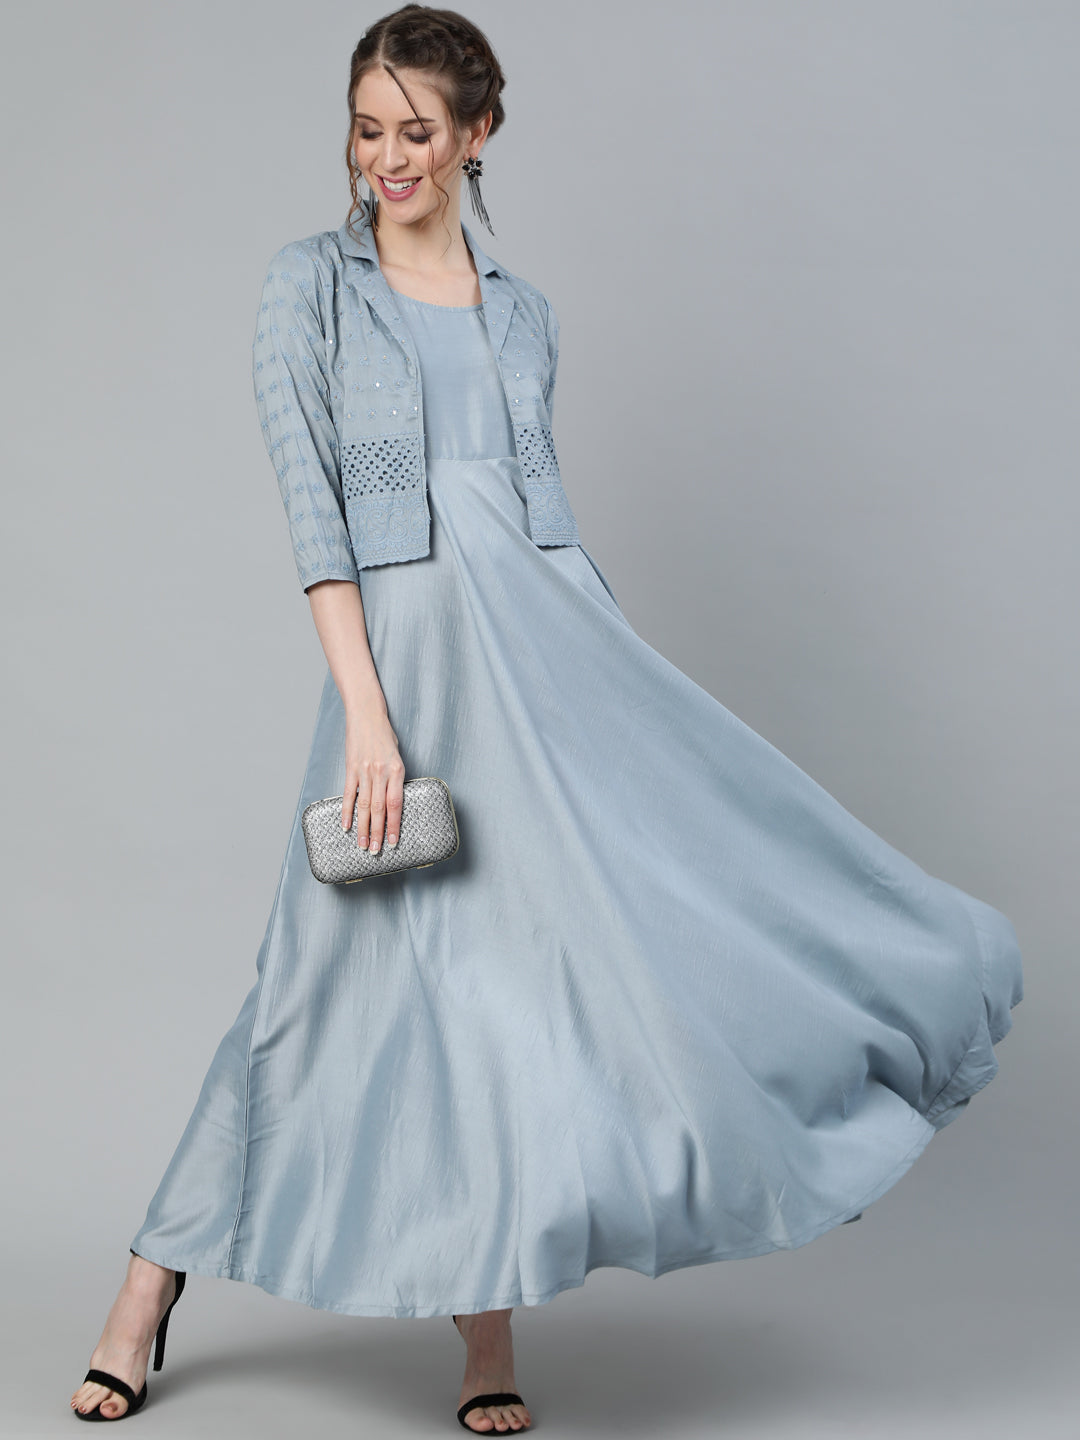 Blue Schiffli Designed Maxi Dress With Jacket